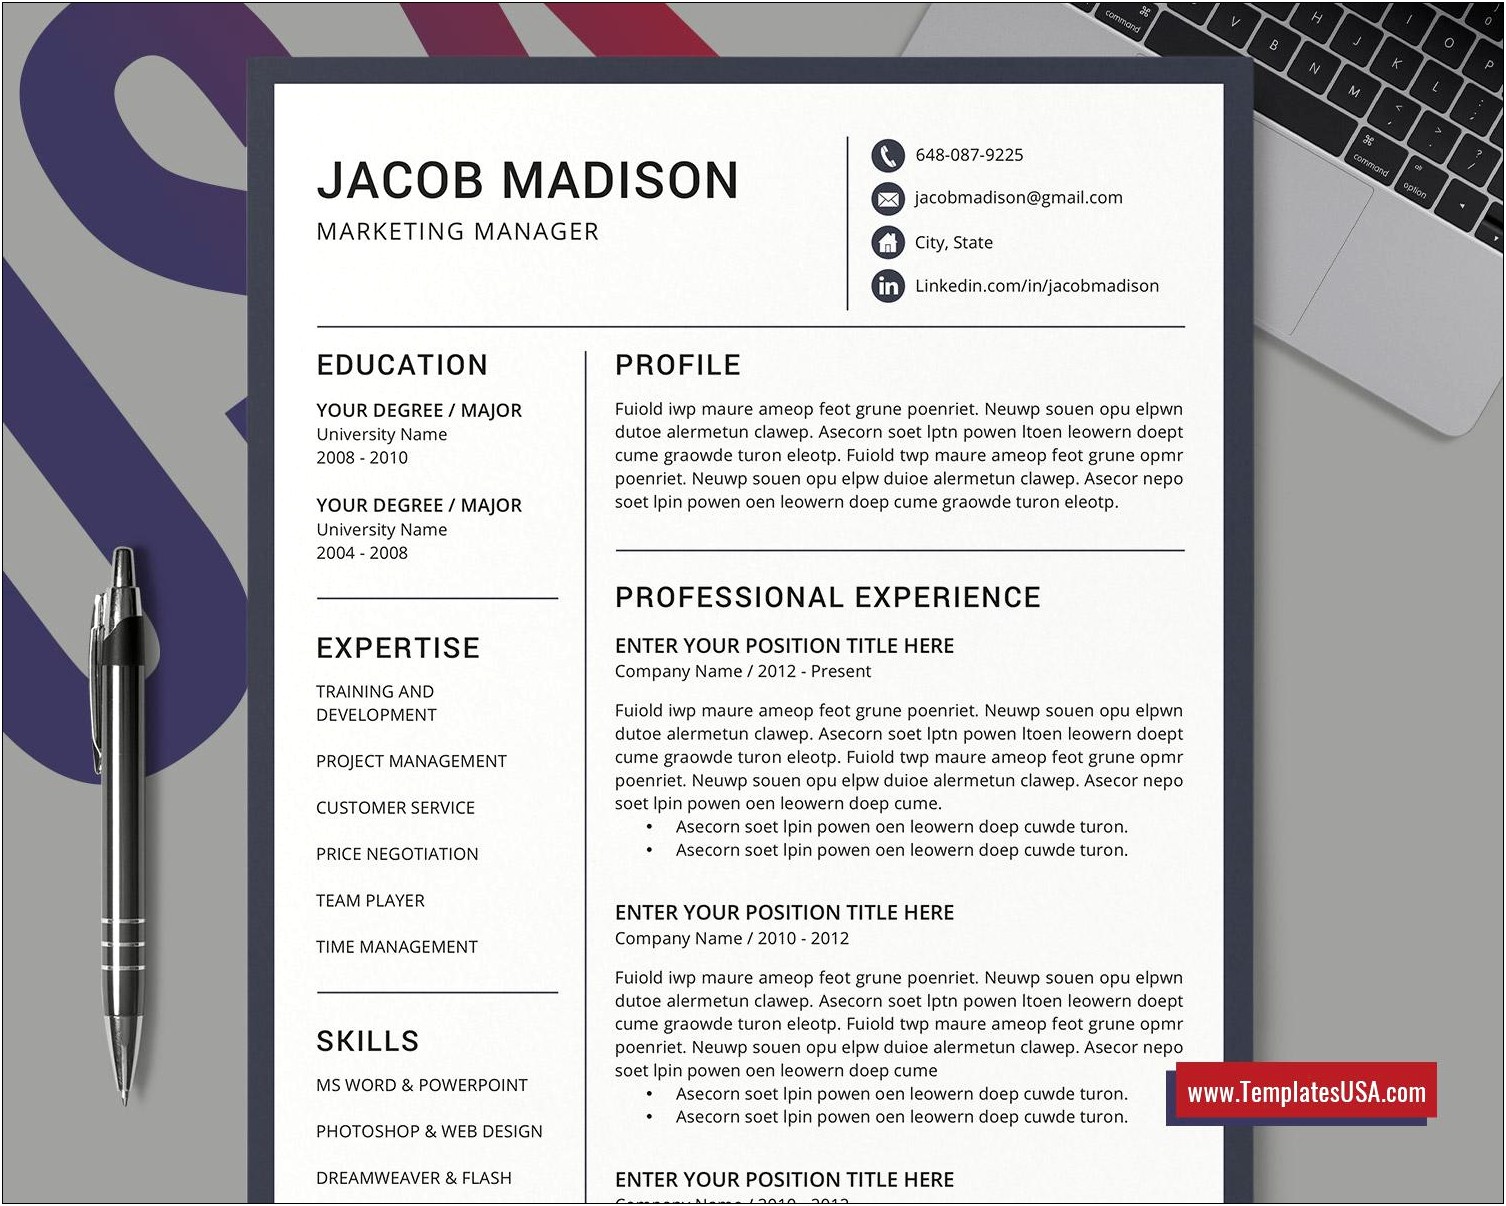 Present Resume For Usa Jobs